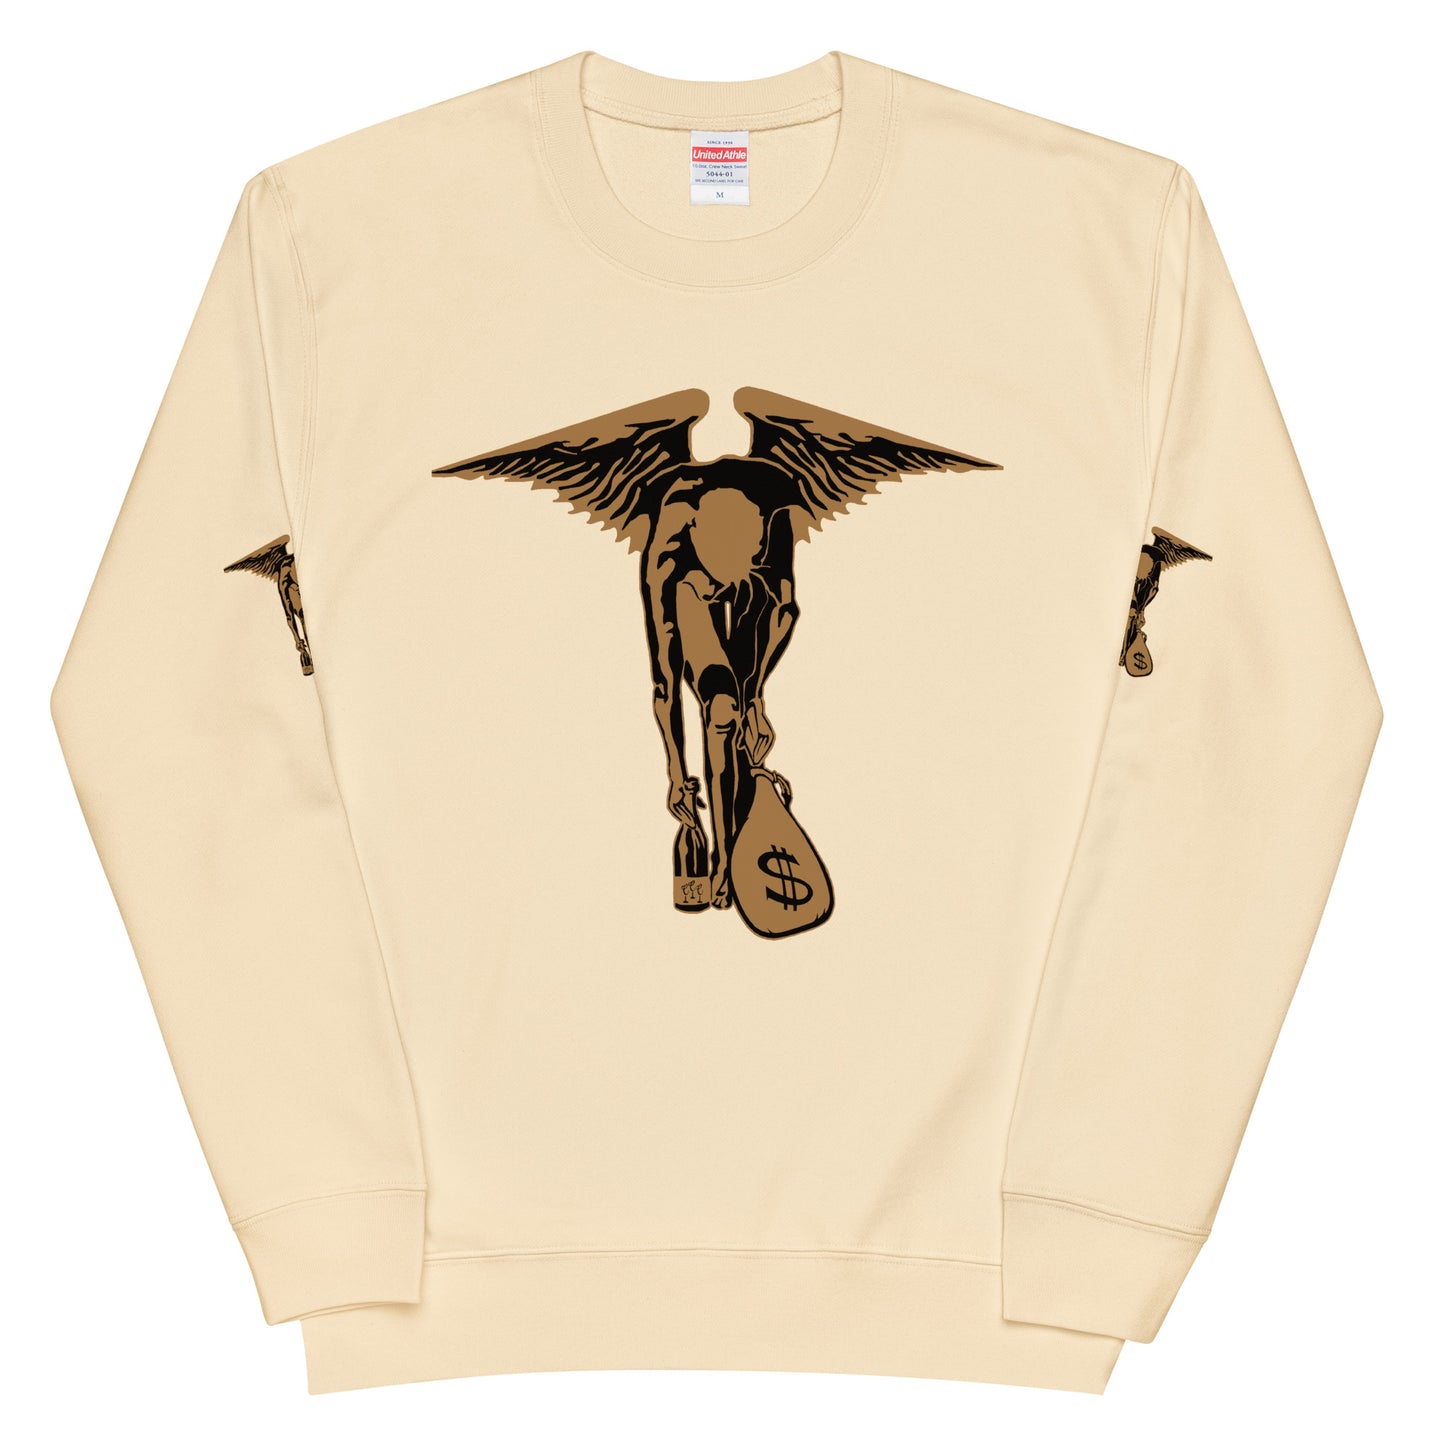 Gold Angel Money bag - Unisex french terry 100% Cotton sweatshirt